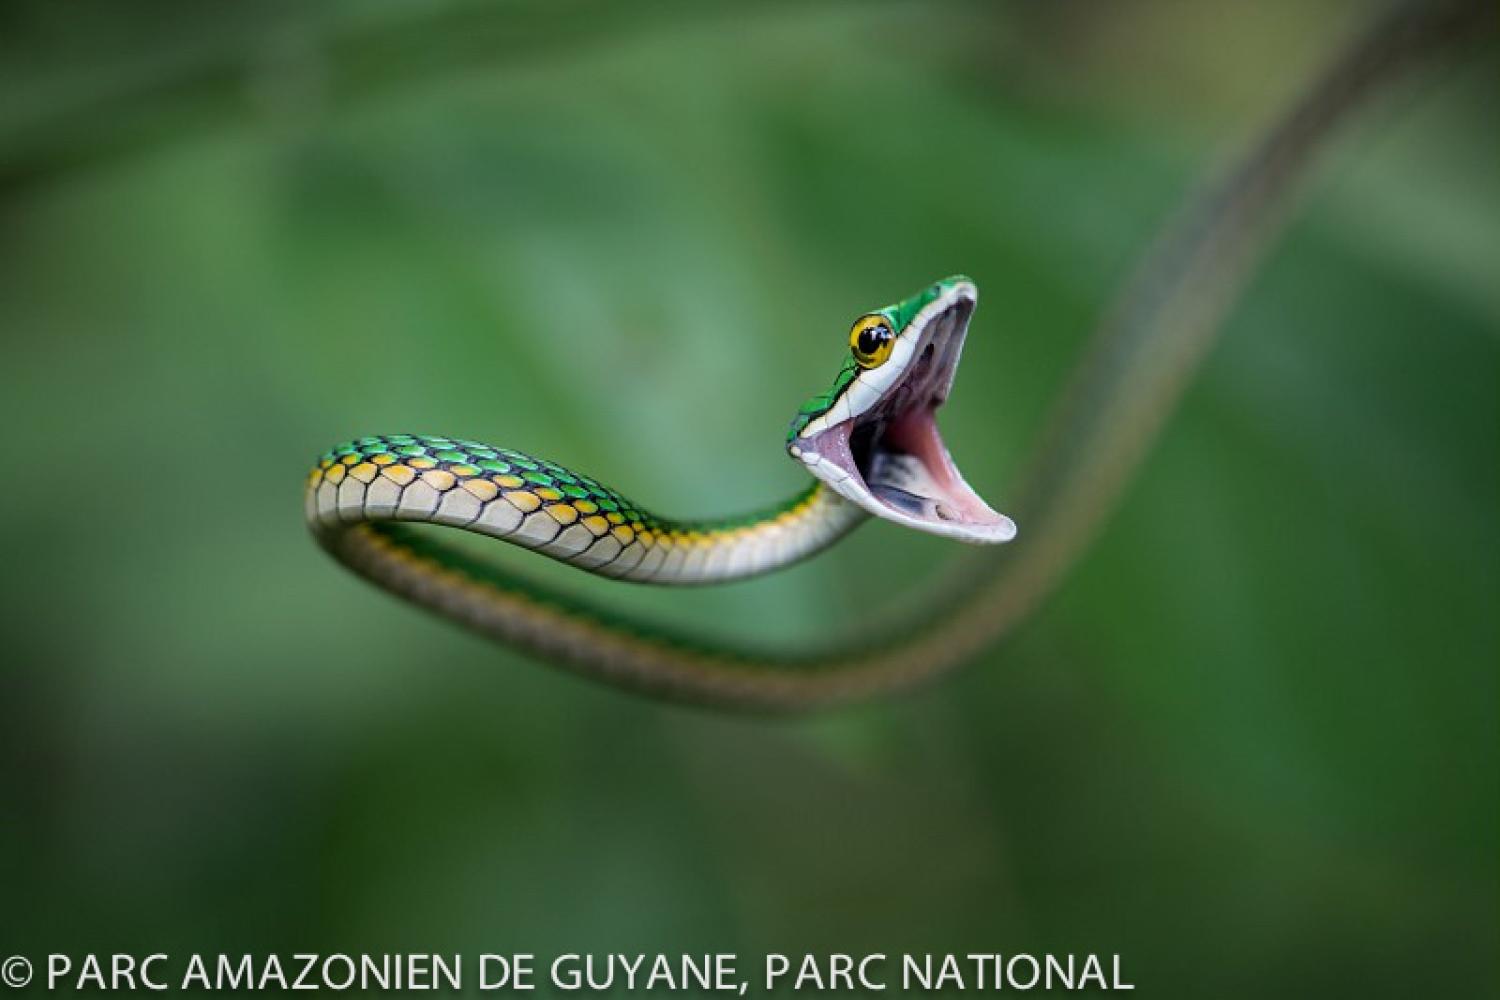 _serpent_liane_leptophis_ahaetulla_en_position_dintimidation_dans_la_vegetation_en_bord_de_riviere._c_guillaume_feuillet_-pag_.jpg